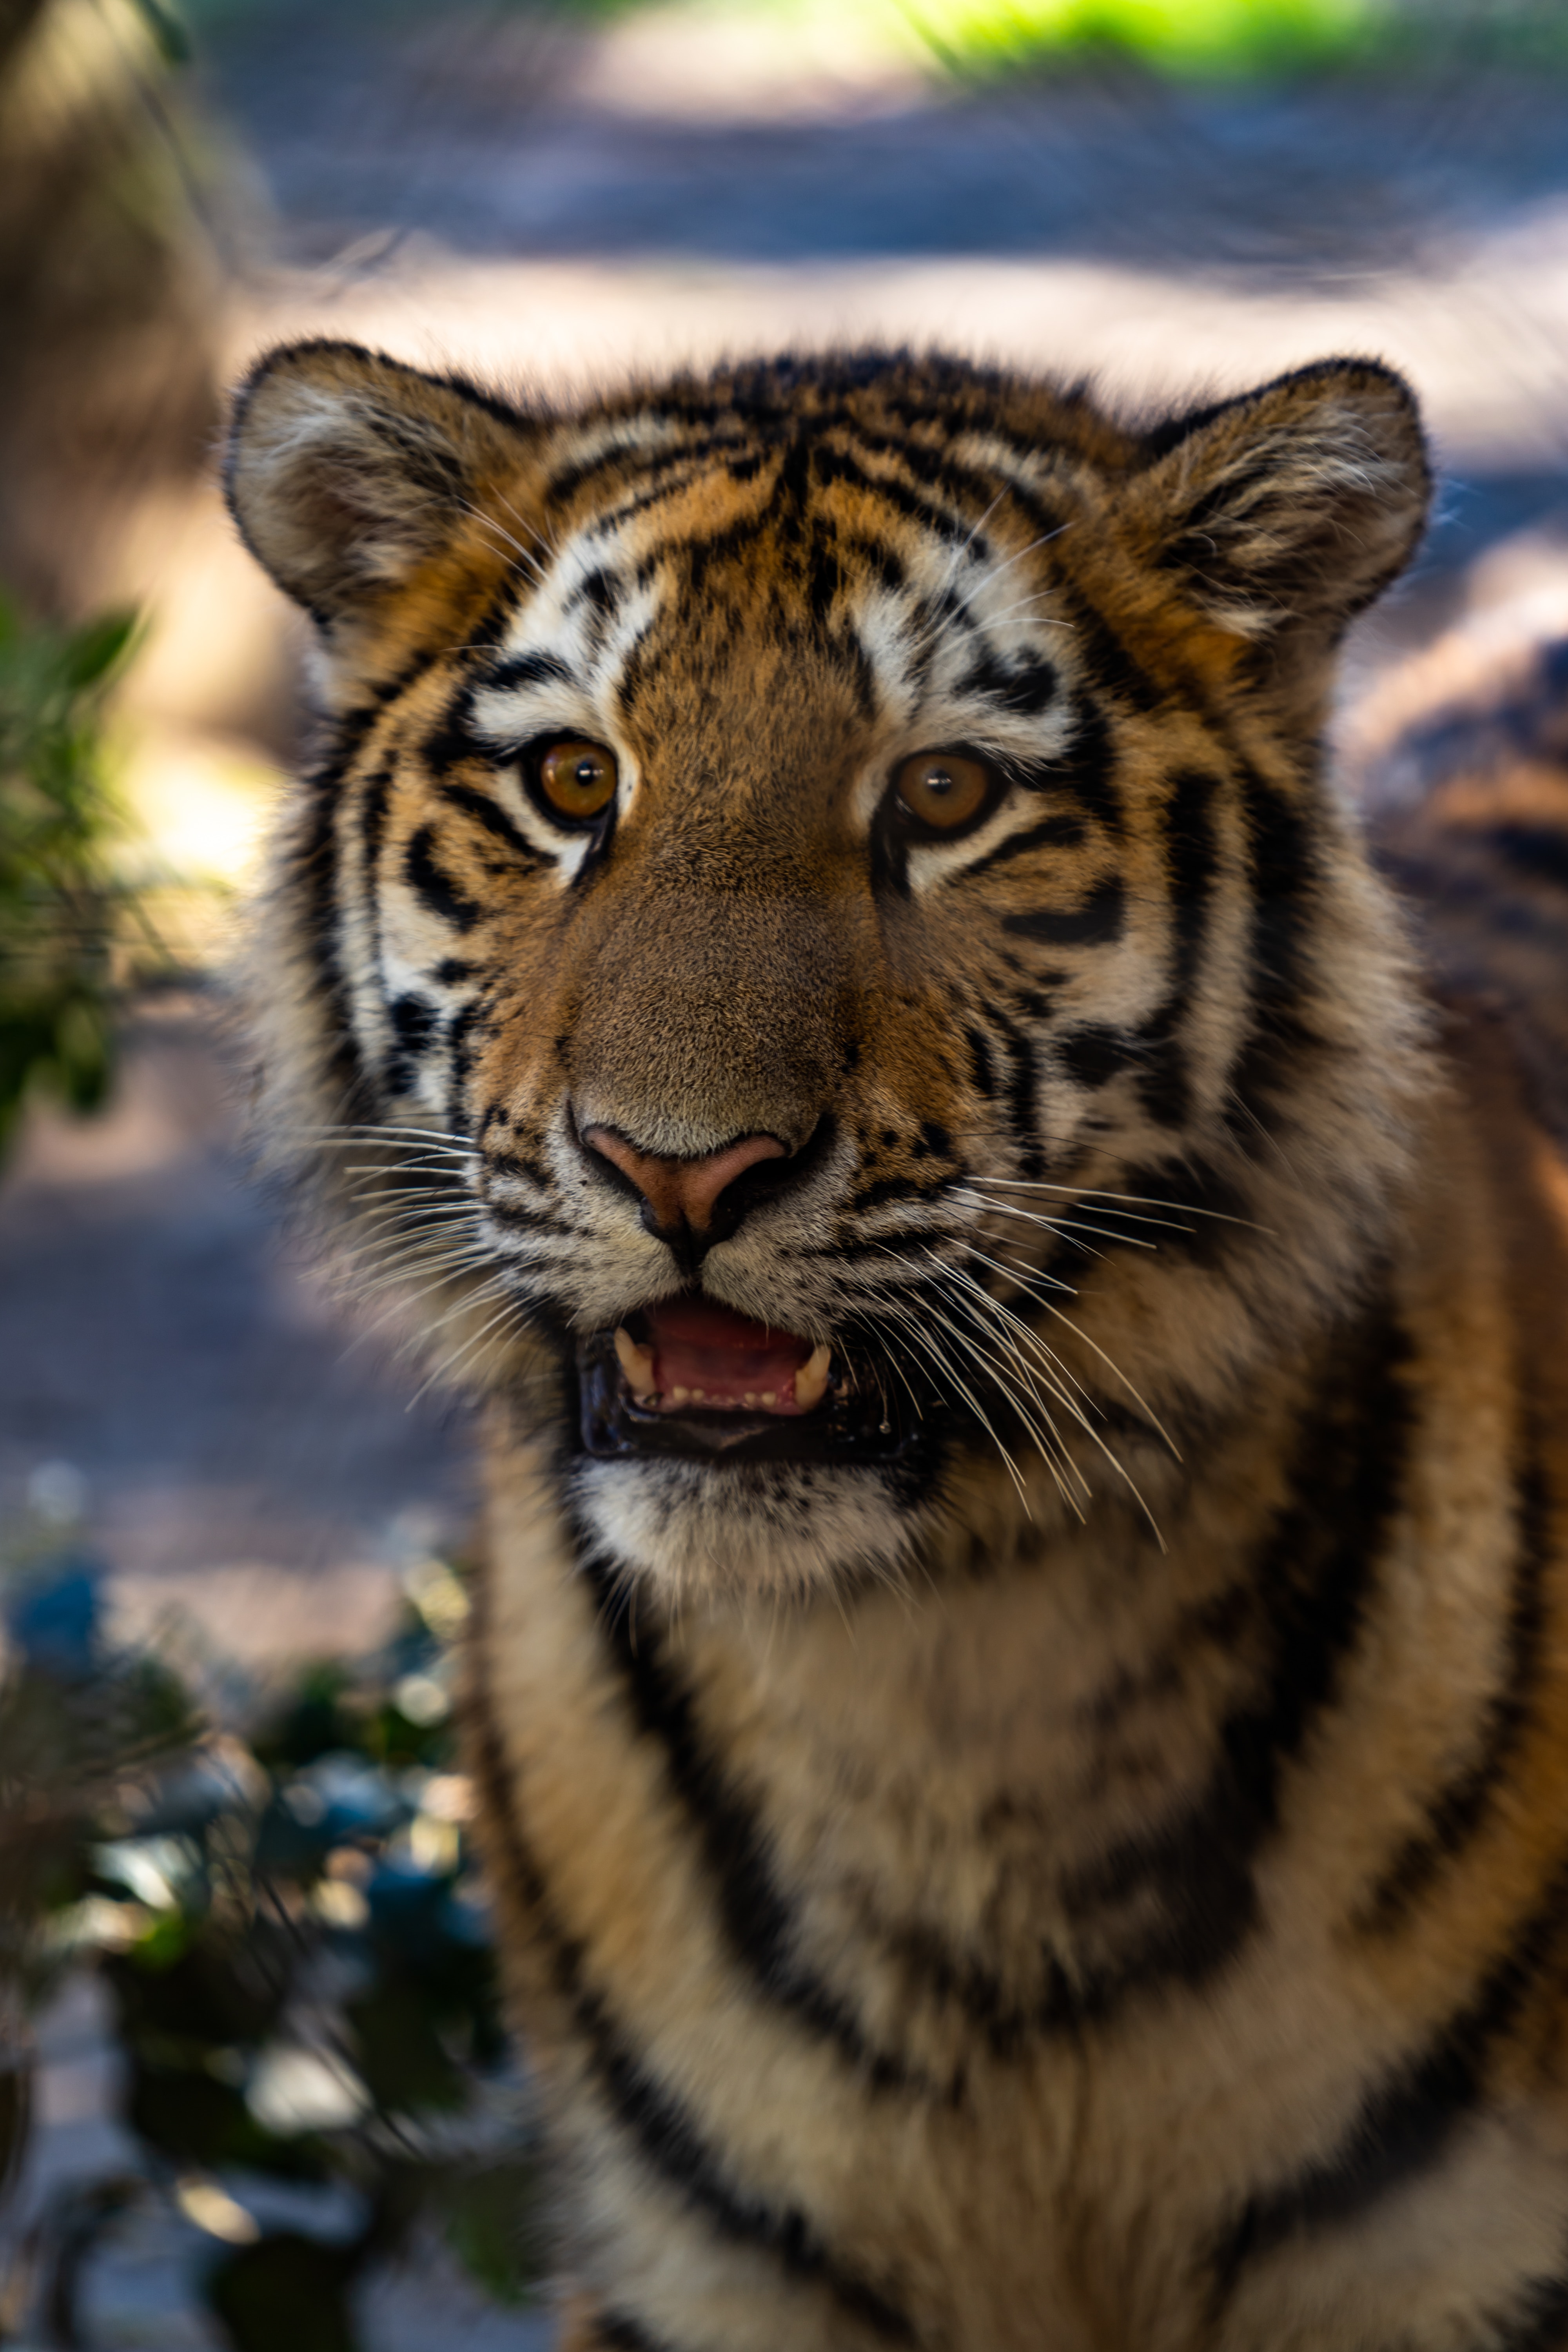 107898 descargar imagen animales, gato grande, visión, opinión, fauna silvestre, vida silvestre, tigre, cachorro de tigre: fondos de pantalla y protectores de pantalla gratis